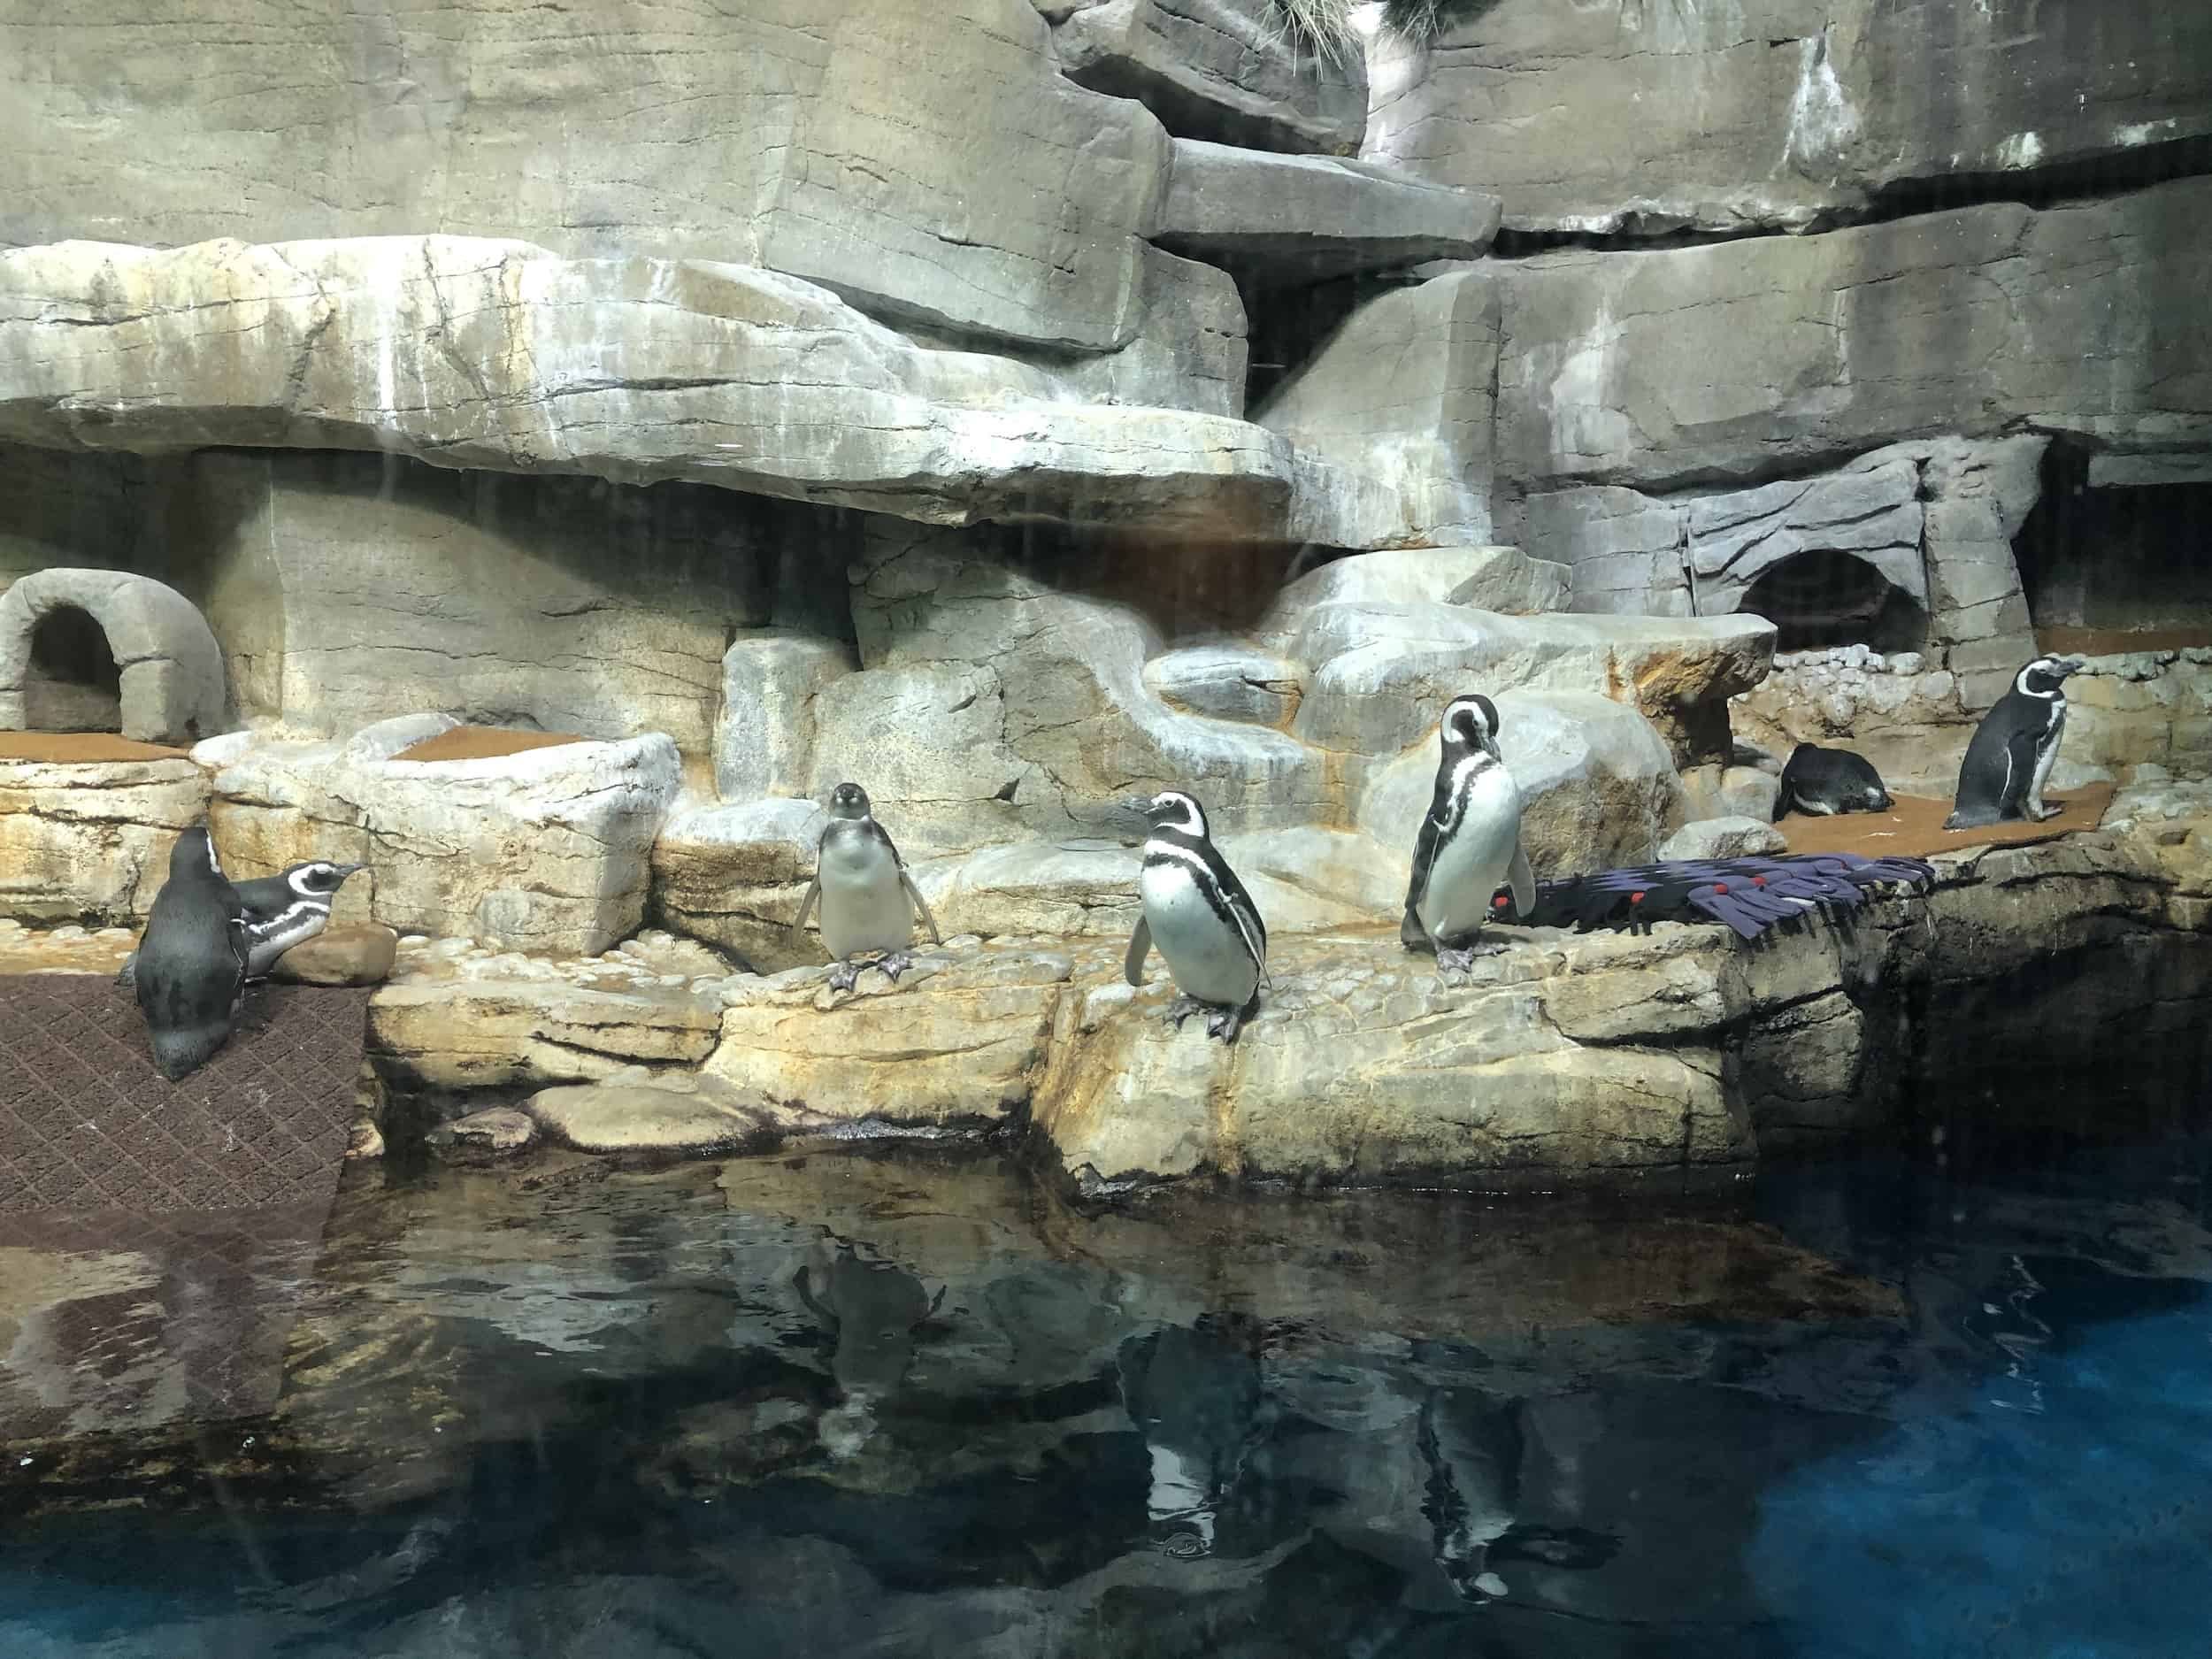 Magellanic penguins in the Polar Play Zone at the Shedd Aquarium in Chicago, Illinois